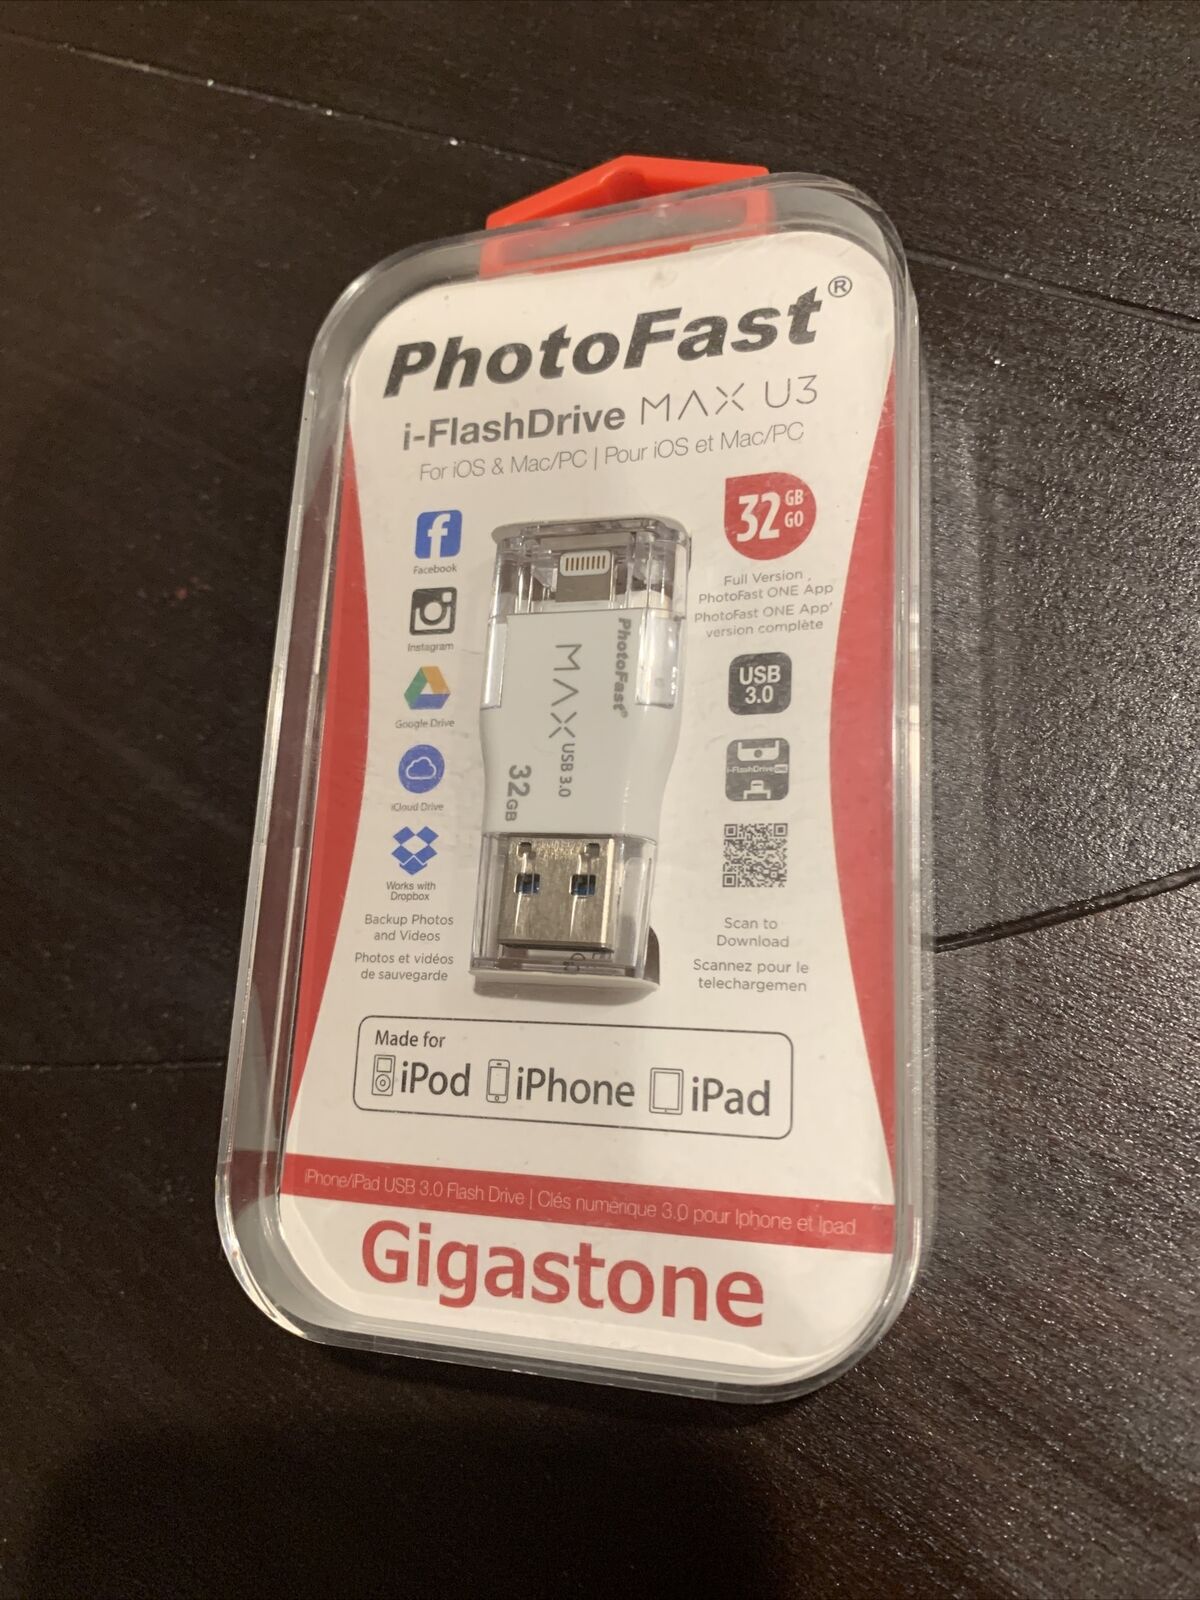 PhotoFast Gigastone USB 3.0 i-FlashDrive MAX U3 for iOS - White 32GB NEW!